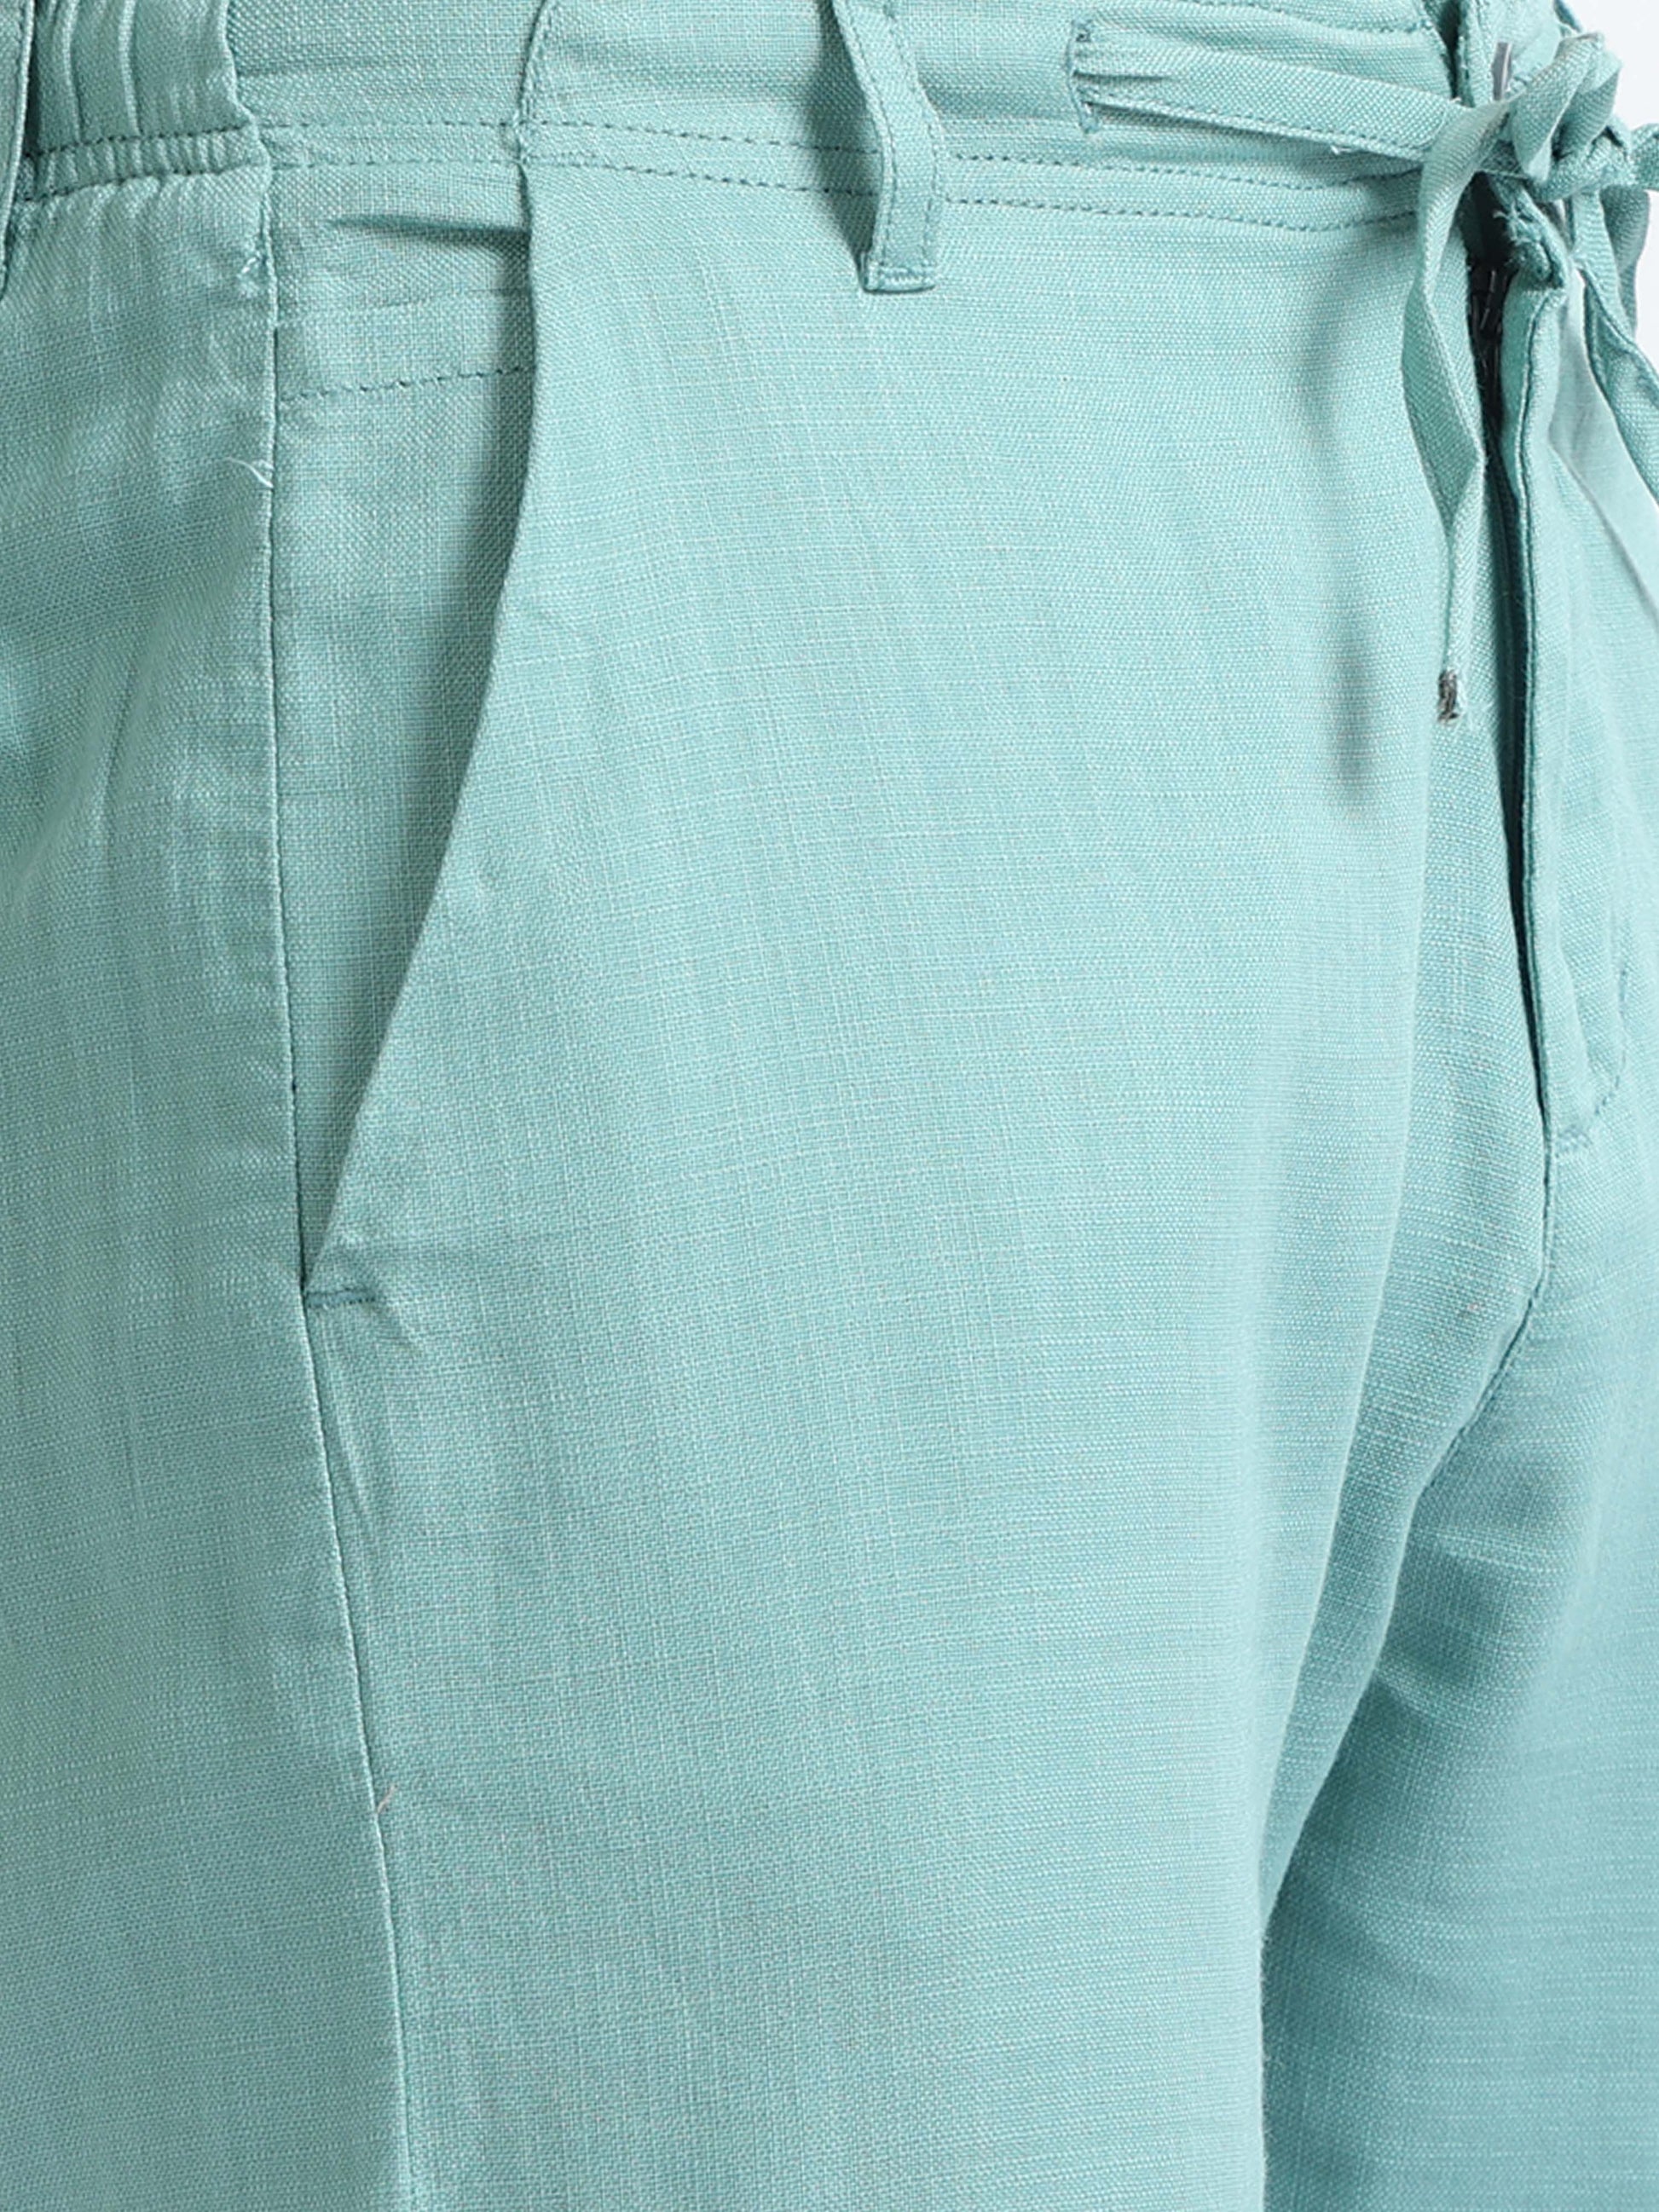 Buy Drawcod Linen Fashion Pant Online.